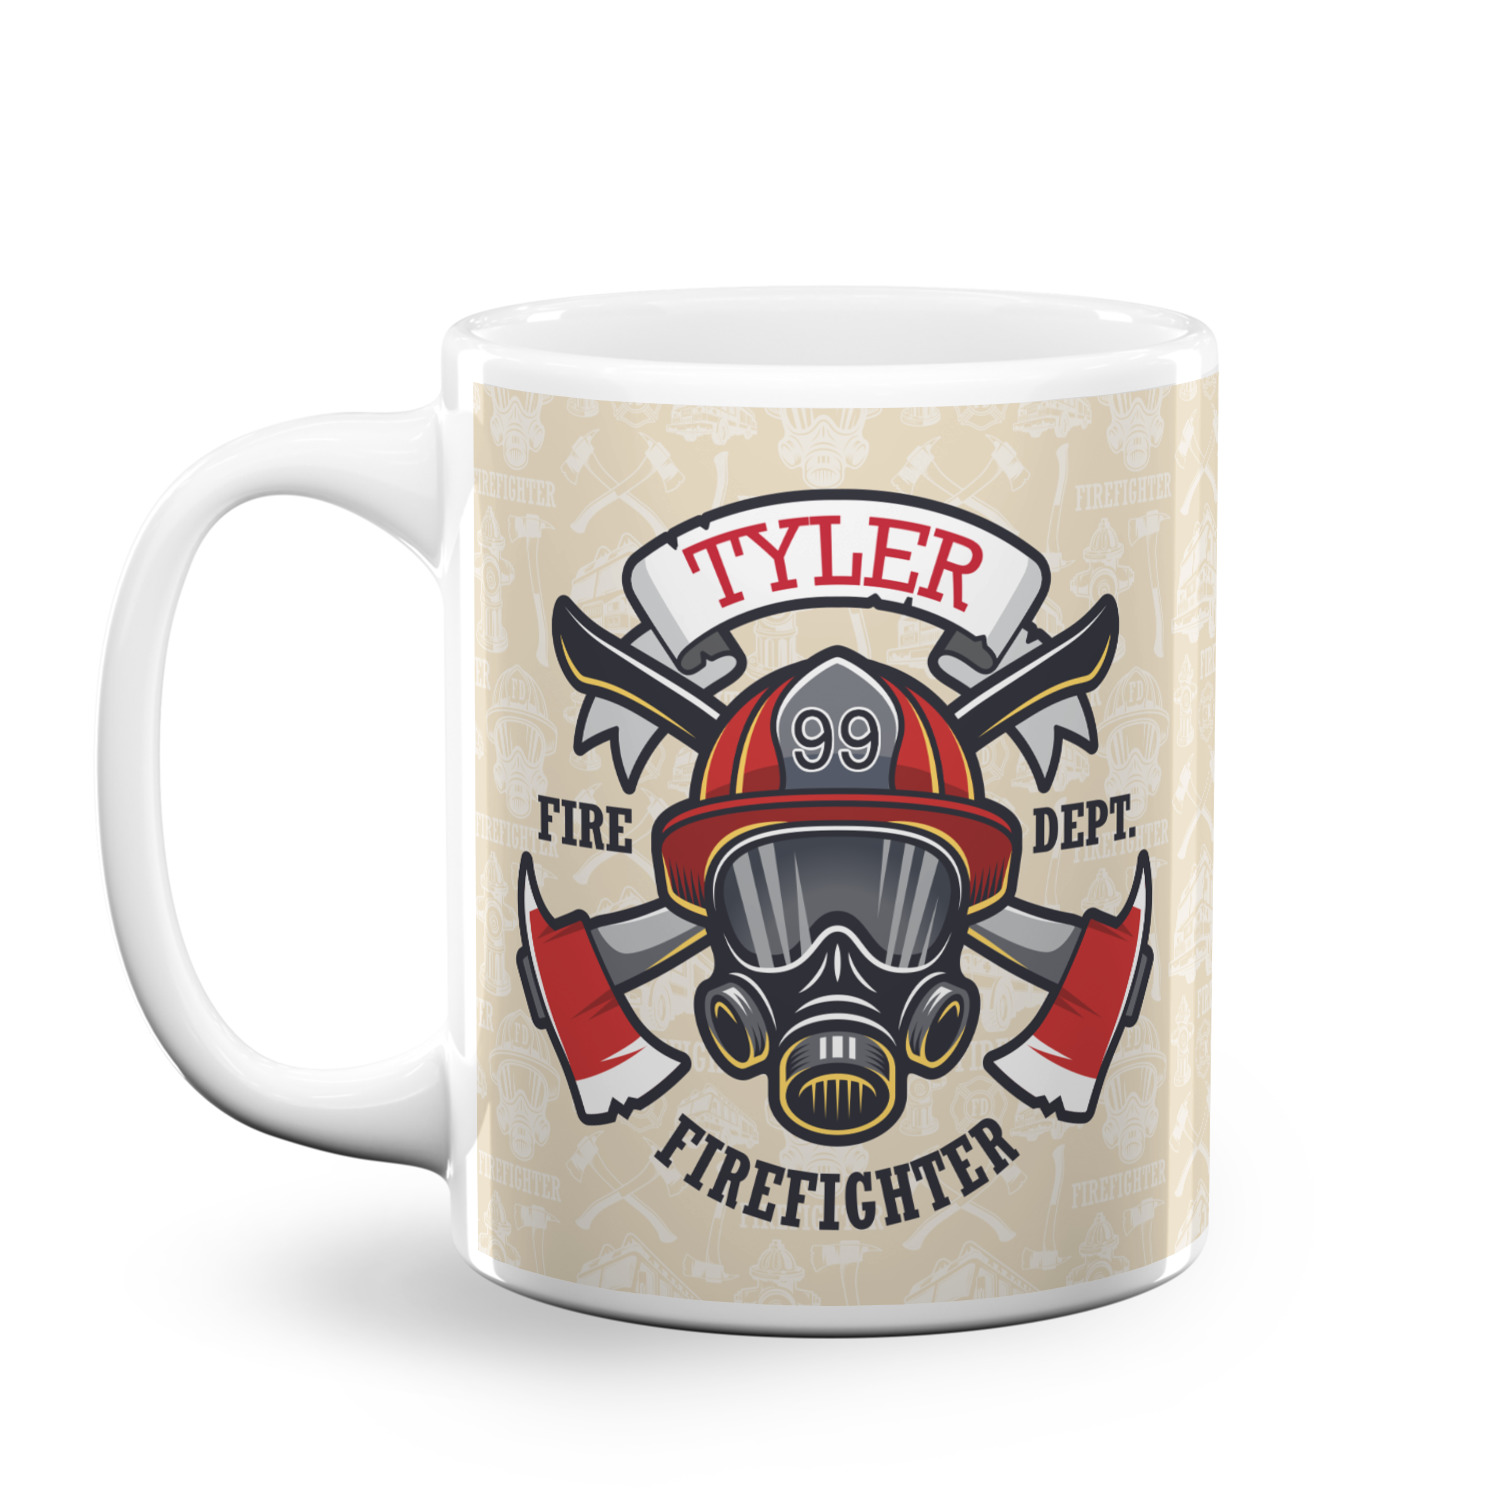 https://www.youcustomizeit.com/common/MAKE/1960007/Firefighter-Coffee-Mug-11-oz-White.jpg?lm=1604077094